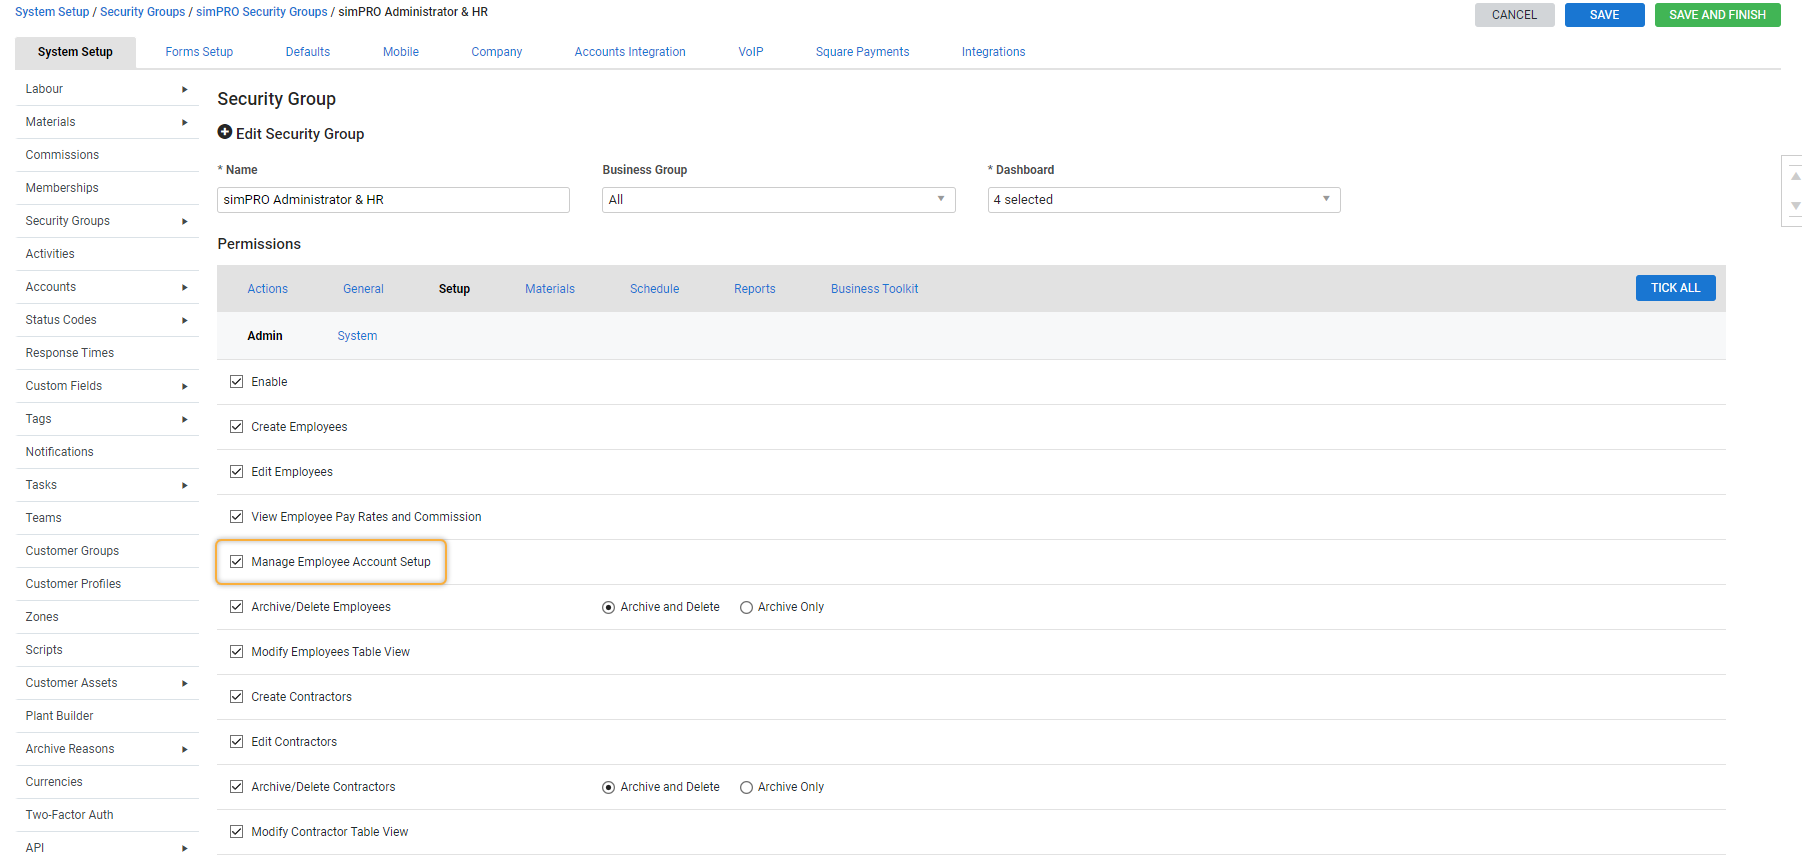 A screenshot of the Manage Employee Account Setup checkbox.